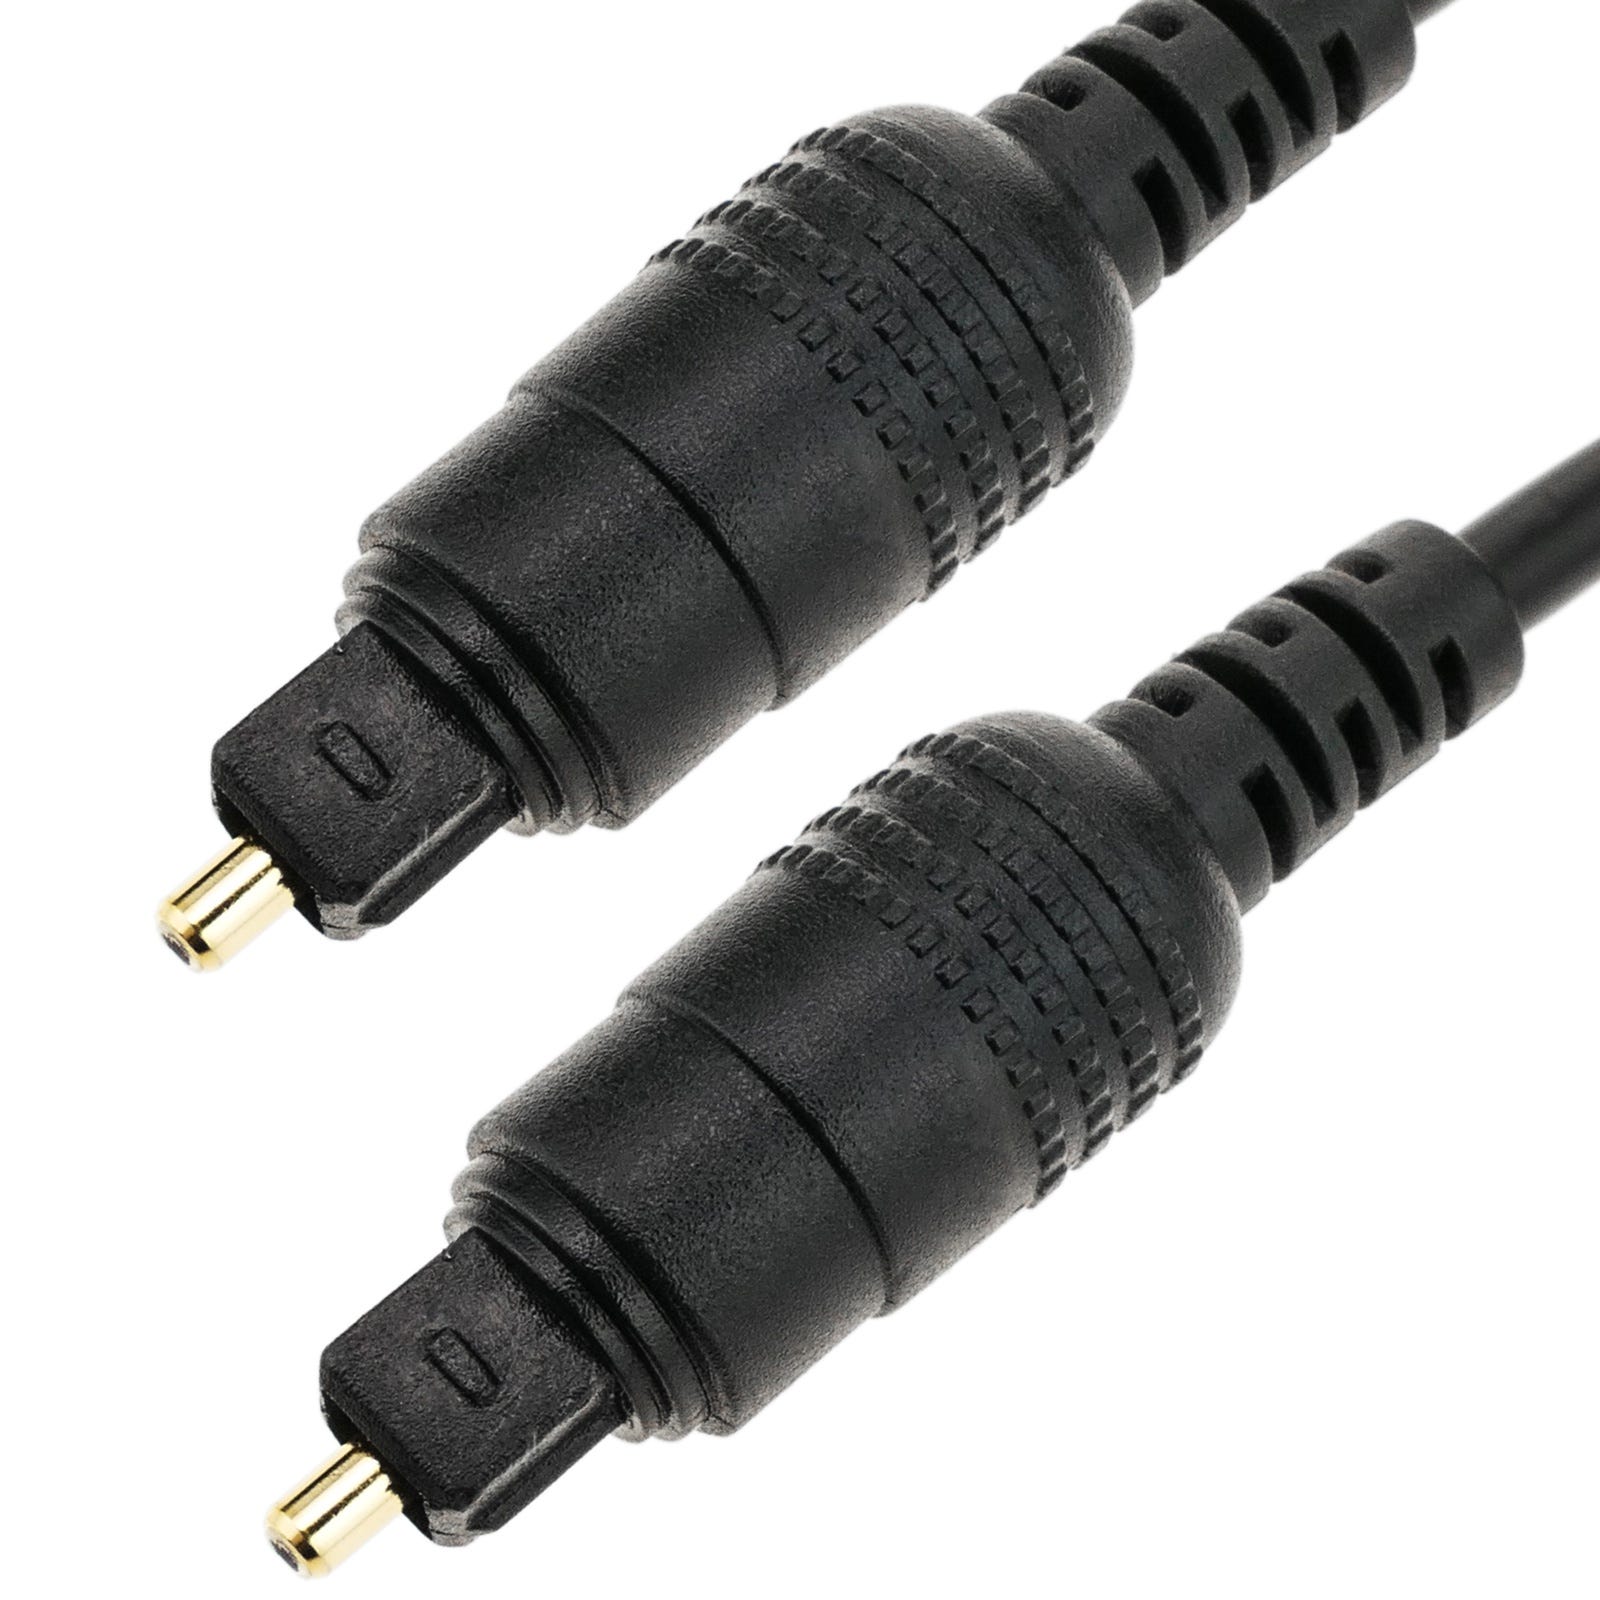 Cable Toslink de audio digital de 2 m de color negro